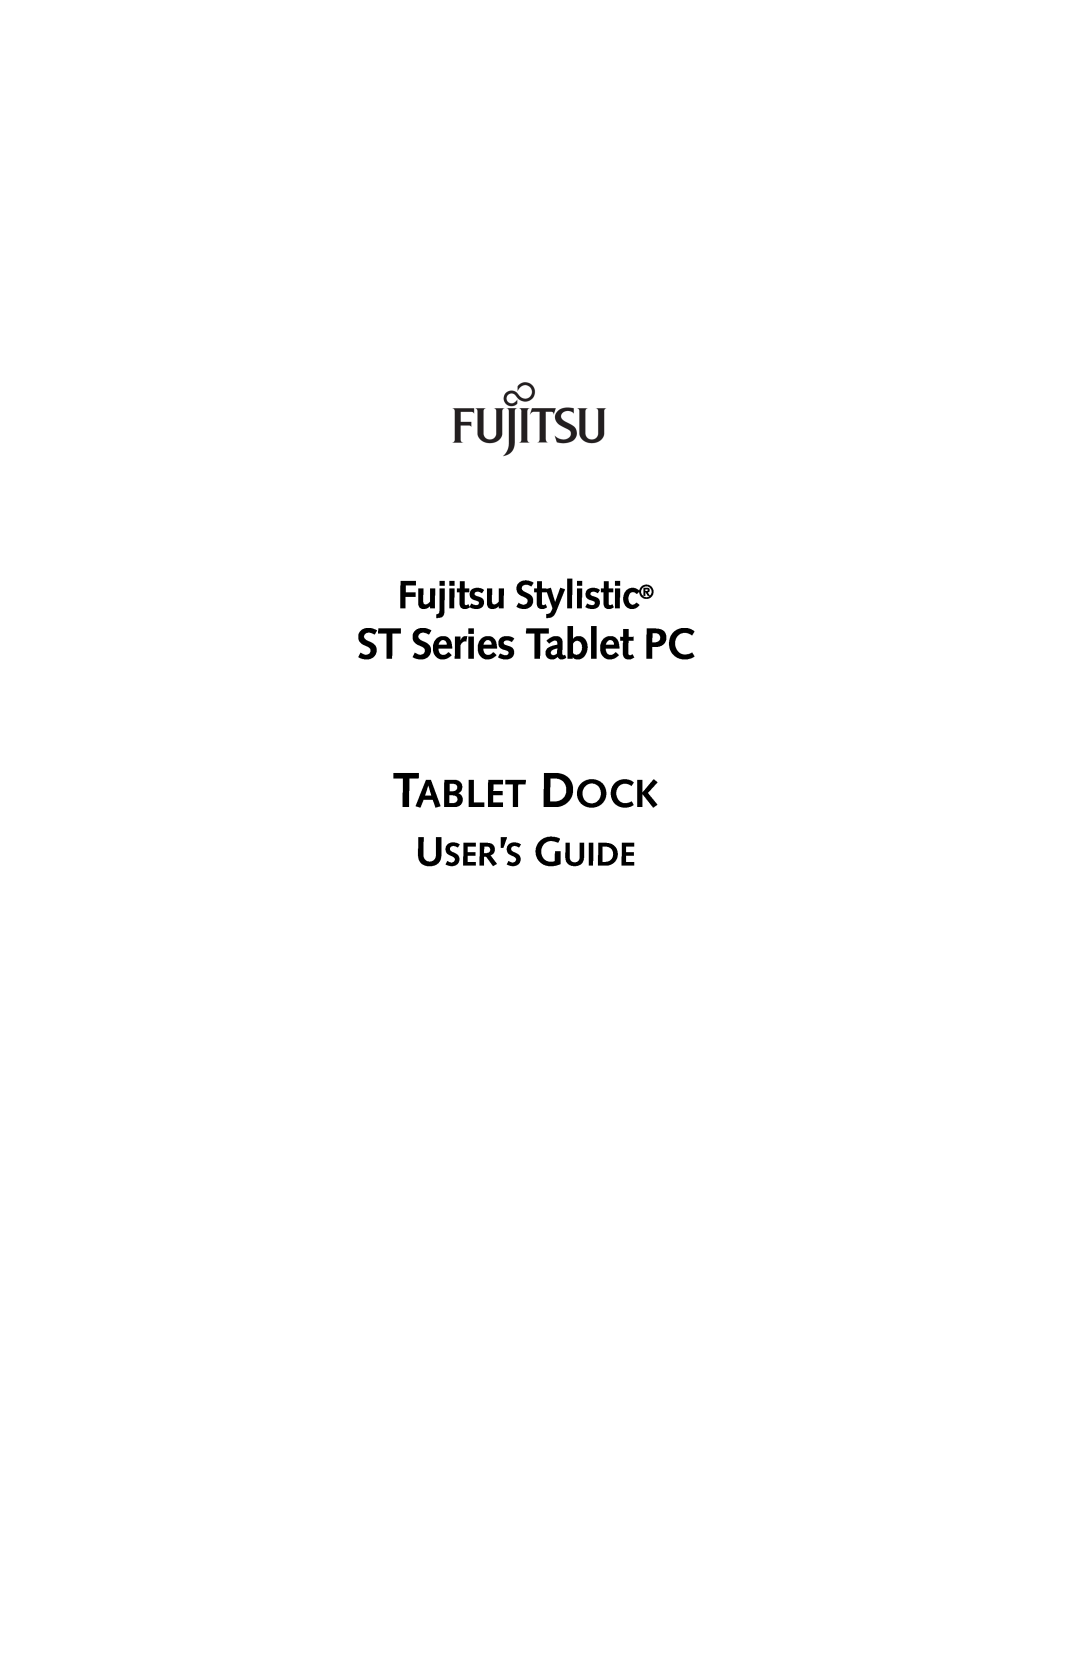 Fujitsu Siemens Computers Stylistic 5011D manual ST Series Tablet PC, Fujitsu Stylistic, Tablet Dock, User’S Guide 